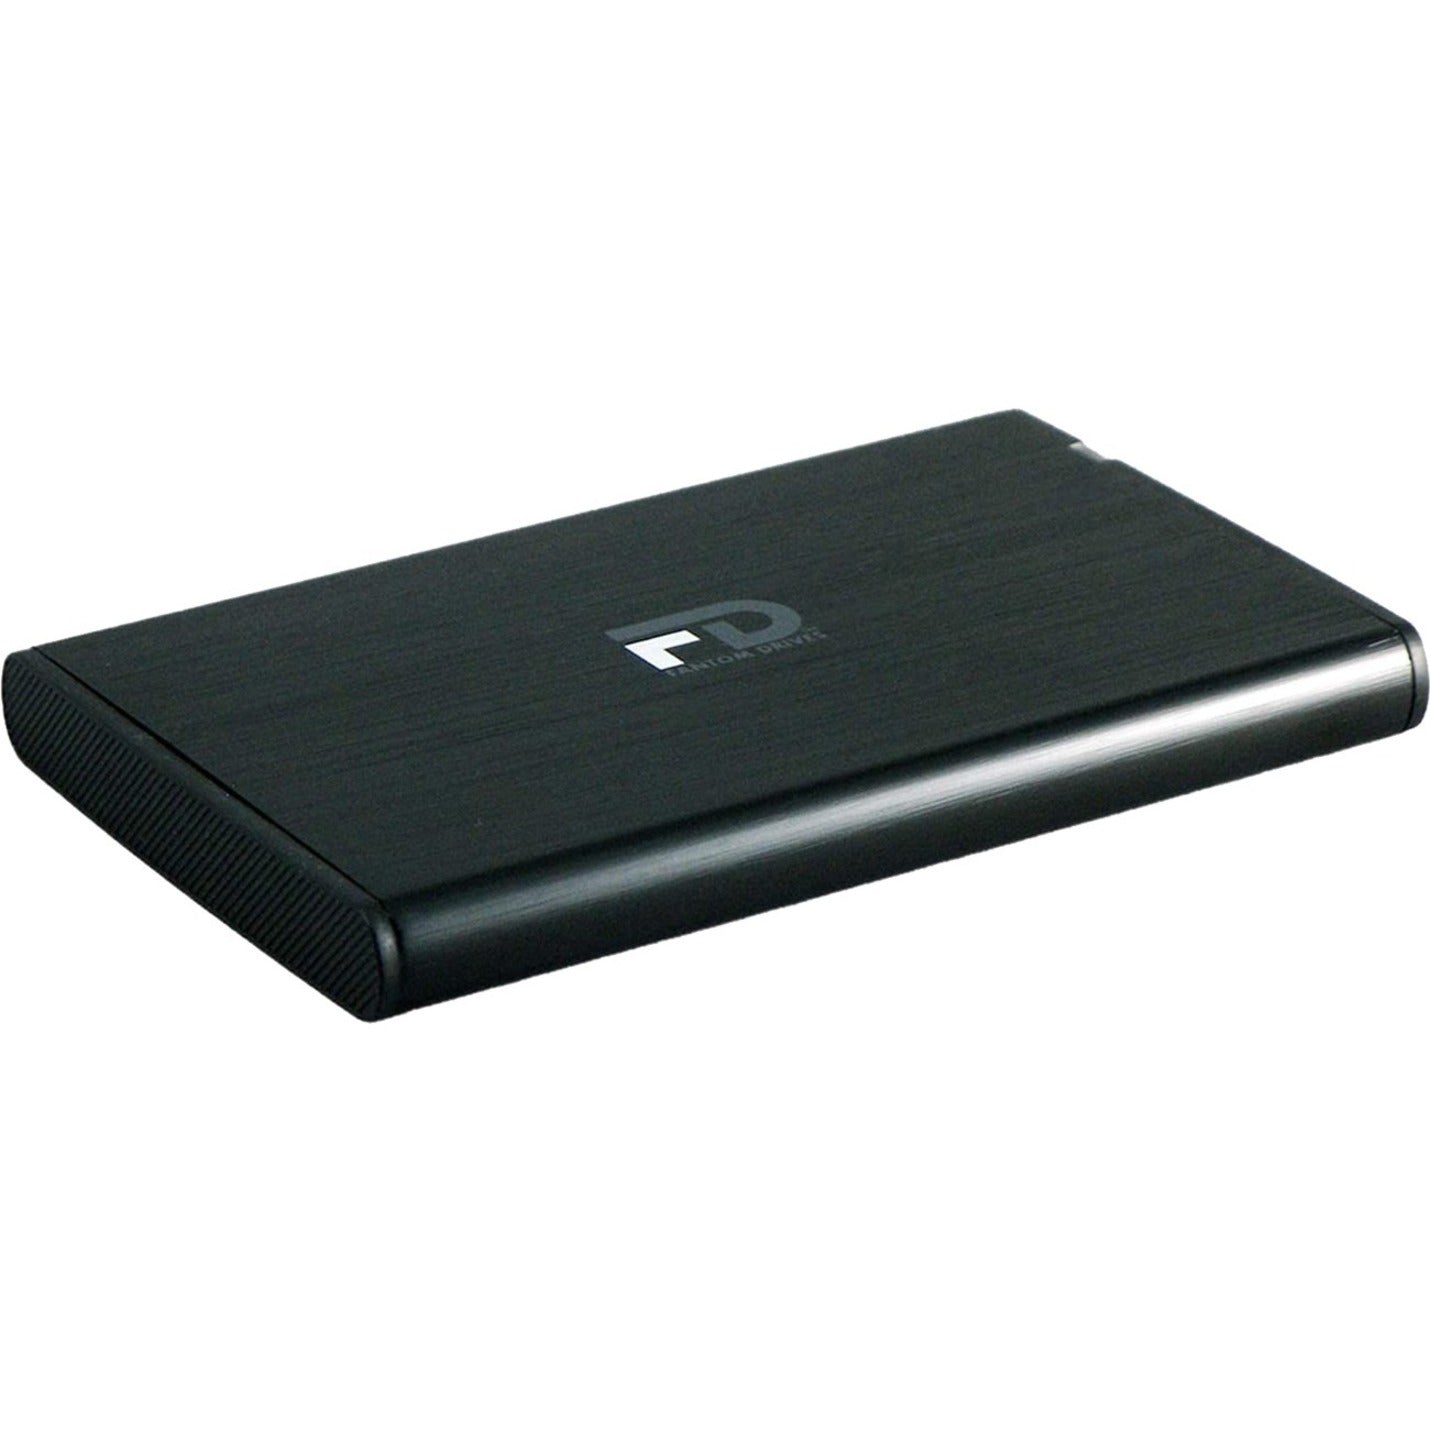 Fantom Drives 1TB Portable Hard Drive - GFORCE 3 Mini - USB 3 Aluminum Black GF3BM1000U